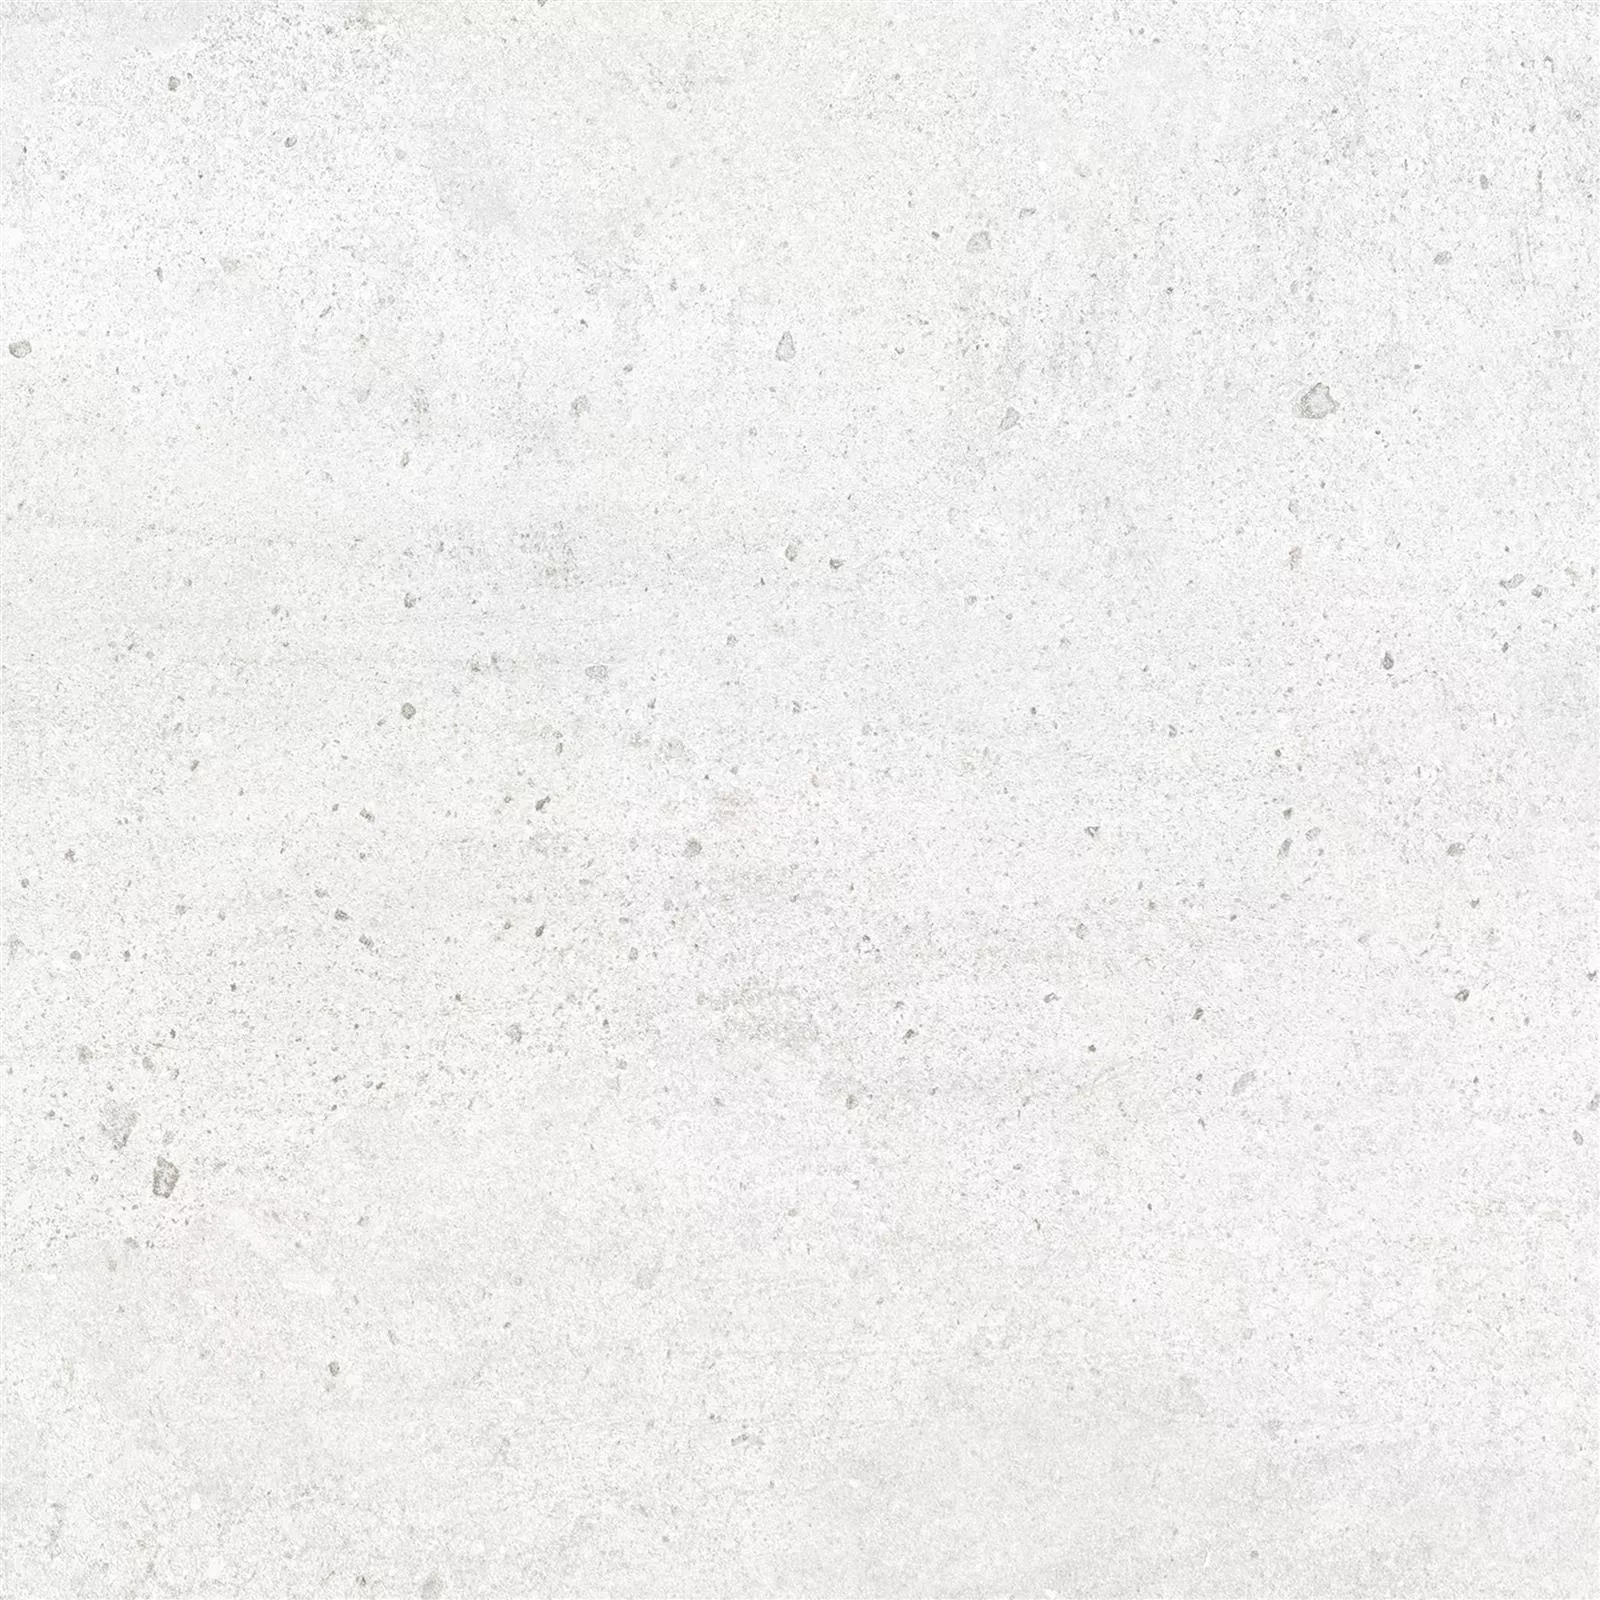 Podlahové Dlaždice Freeland Kámen Vzhled R10/B Bílá 60x60cm